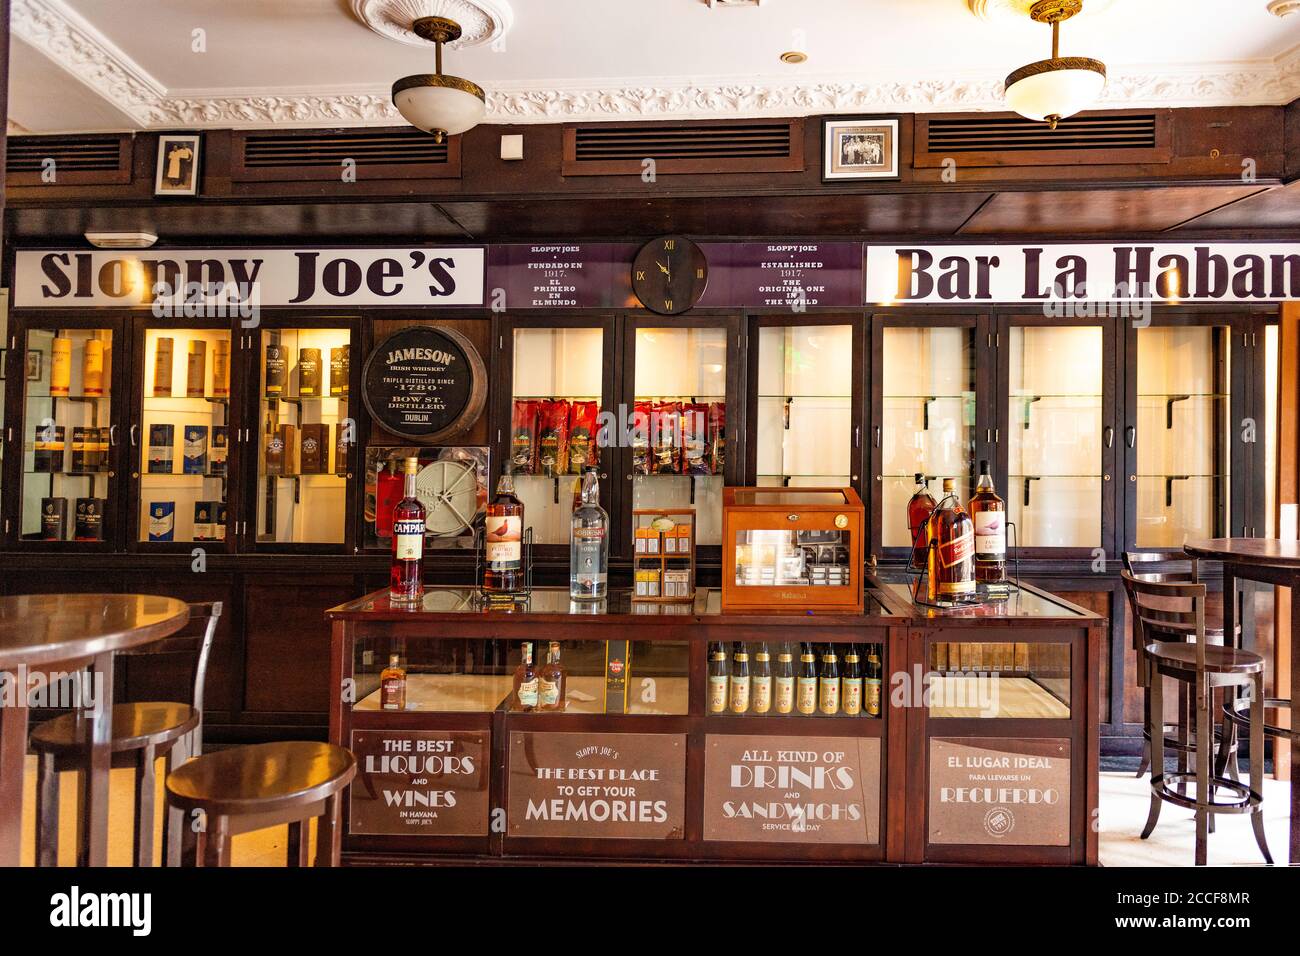 Sloppy Joe's Bar La Habana, Havanna; älteste Bar der Welt, gegründet 1917, Kuba Stockfoto